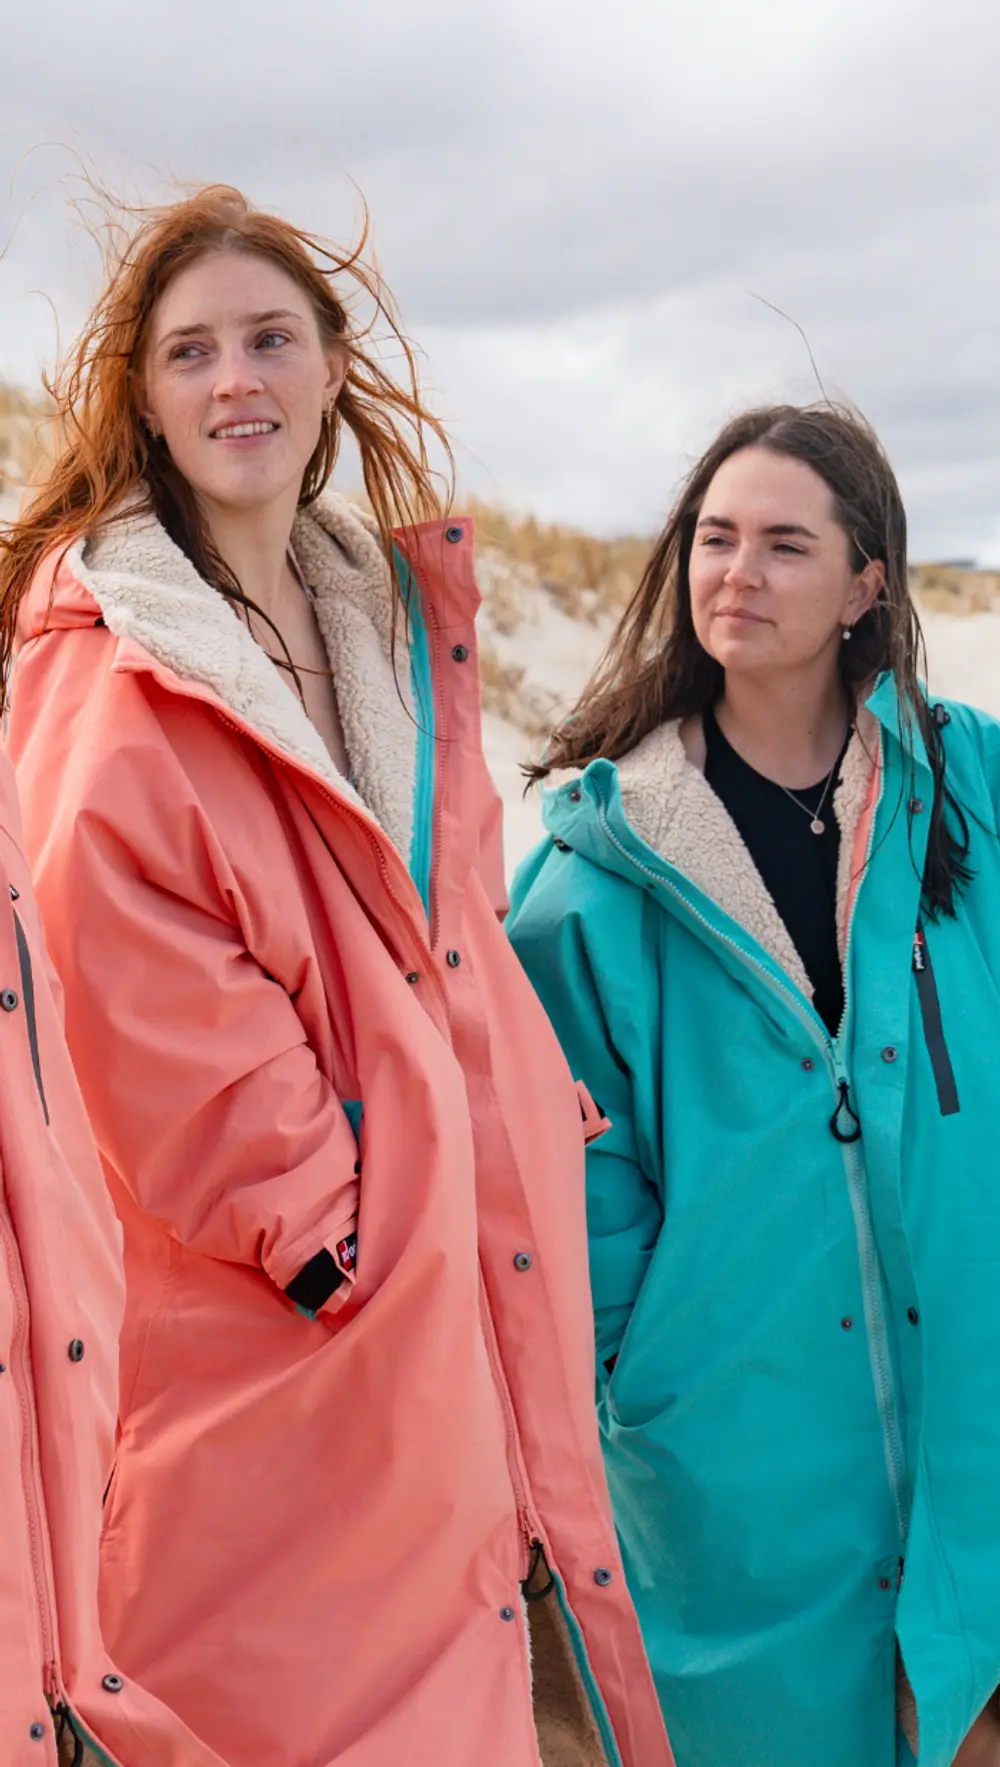 Women's Long Sleeve Pro Change Robe EVO - Icebergs Aqua